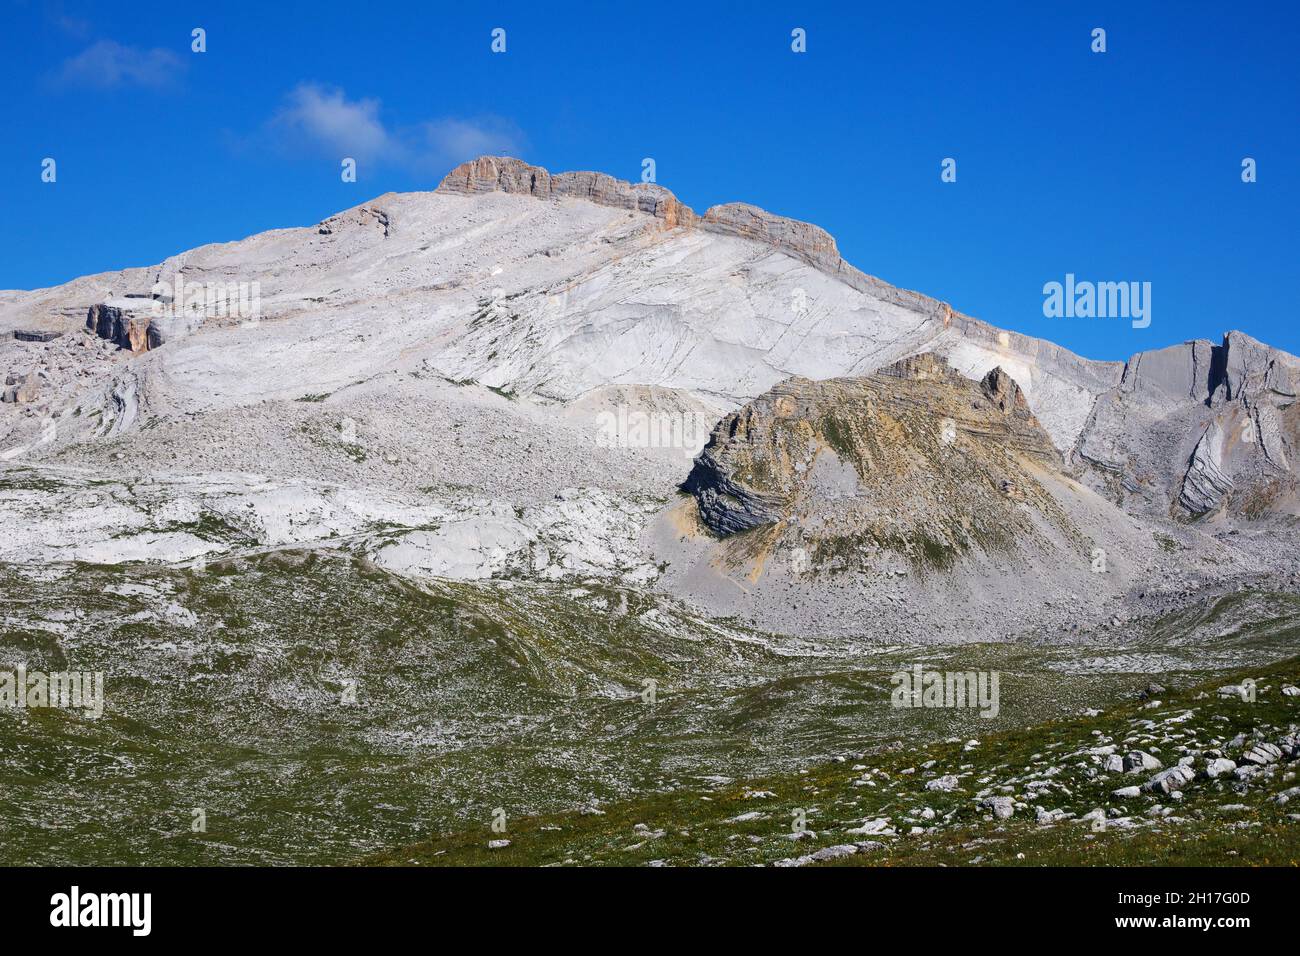 Karst landscape near Sas dle Crusc mountain group. Sasso delle Dieci peak. The Dolomites of Fanes-Senes-Braies nature park. Italian Alps. Europe. Stock Photo